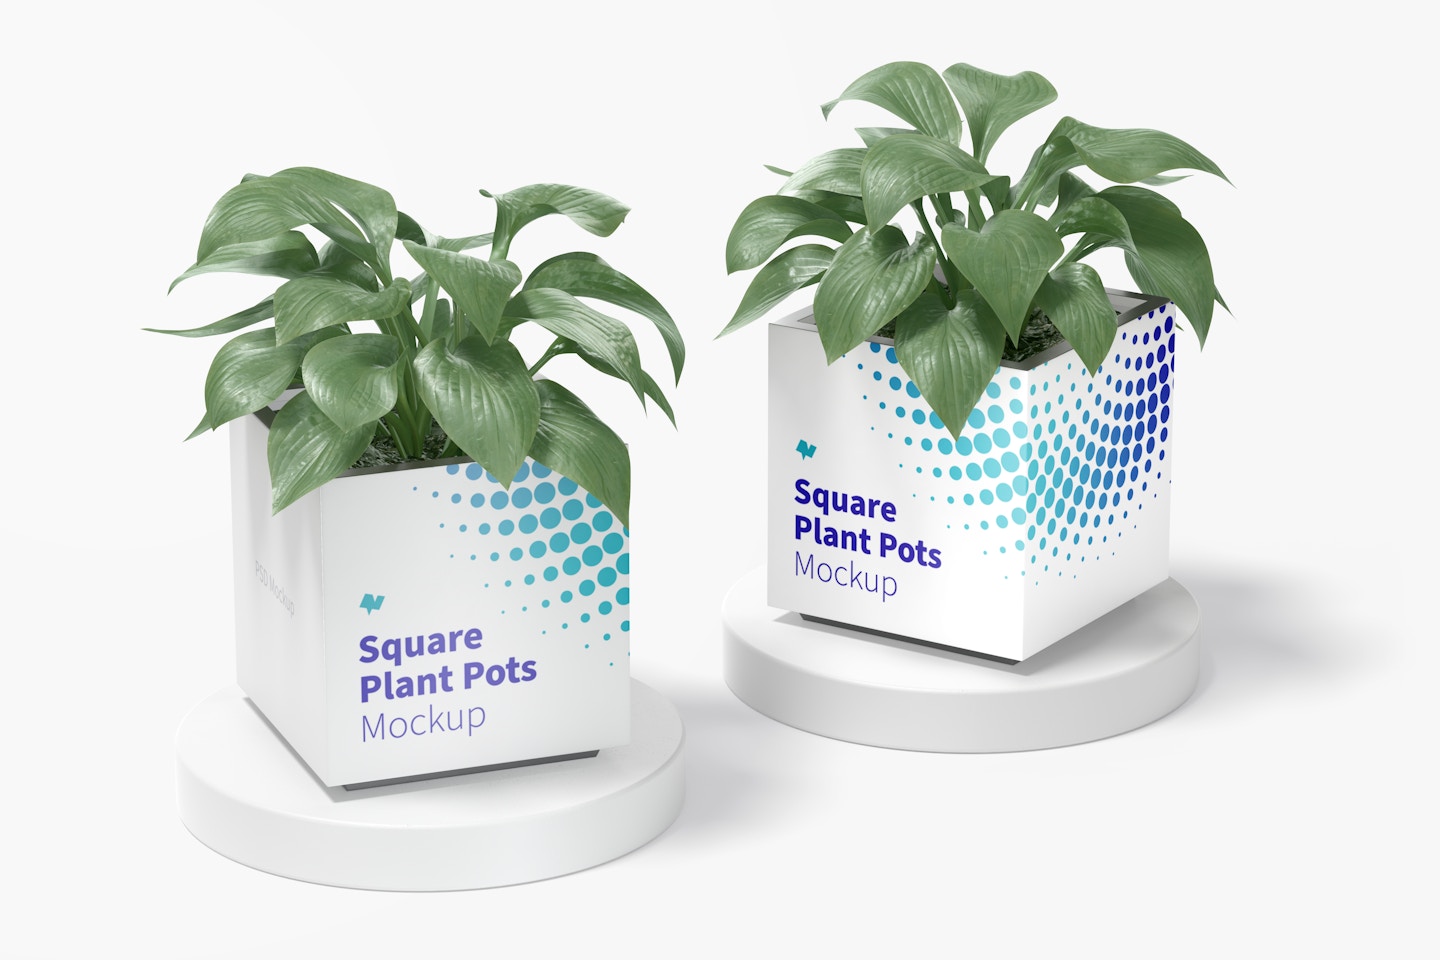 Squared Plant Pots Mockup